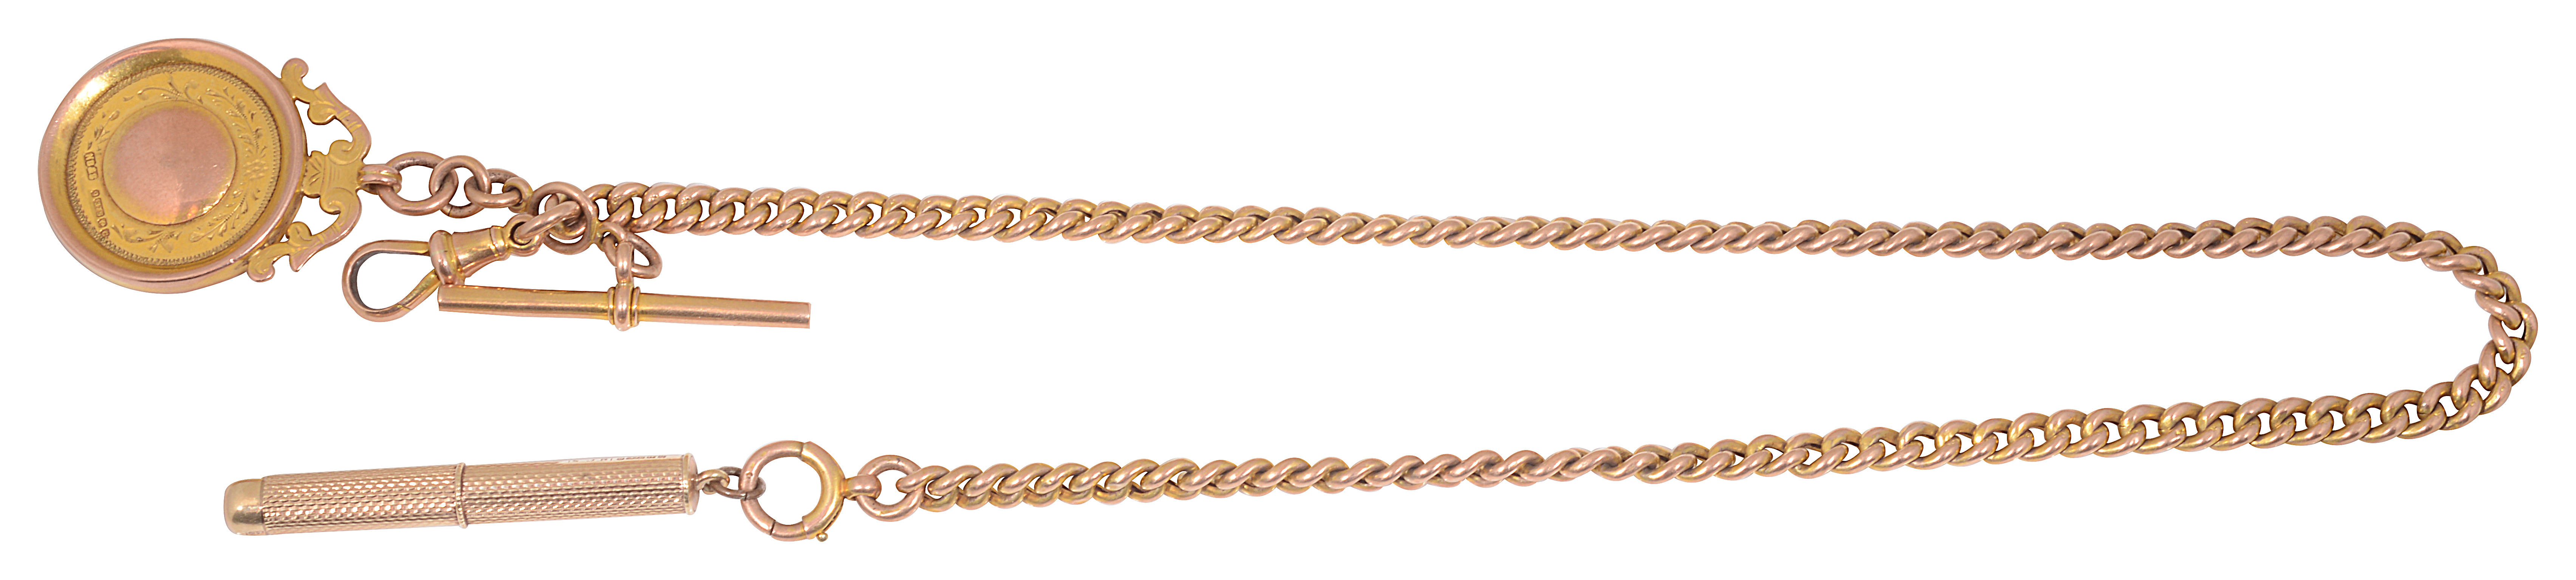 A 9ct gold curb link Albert chain